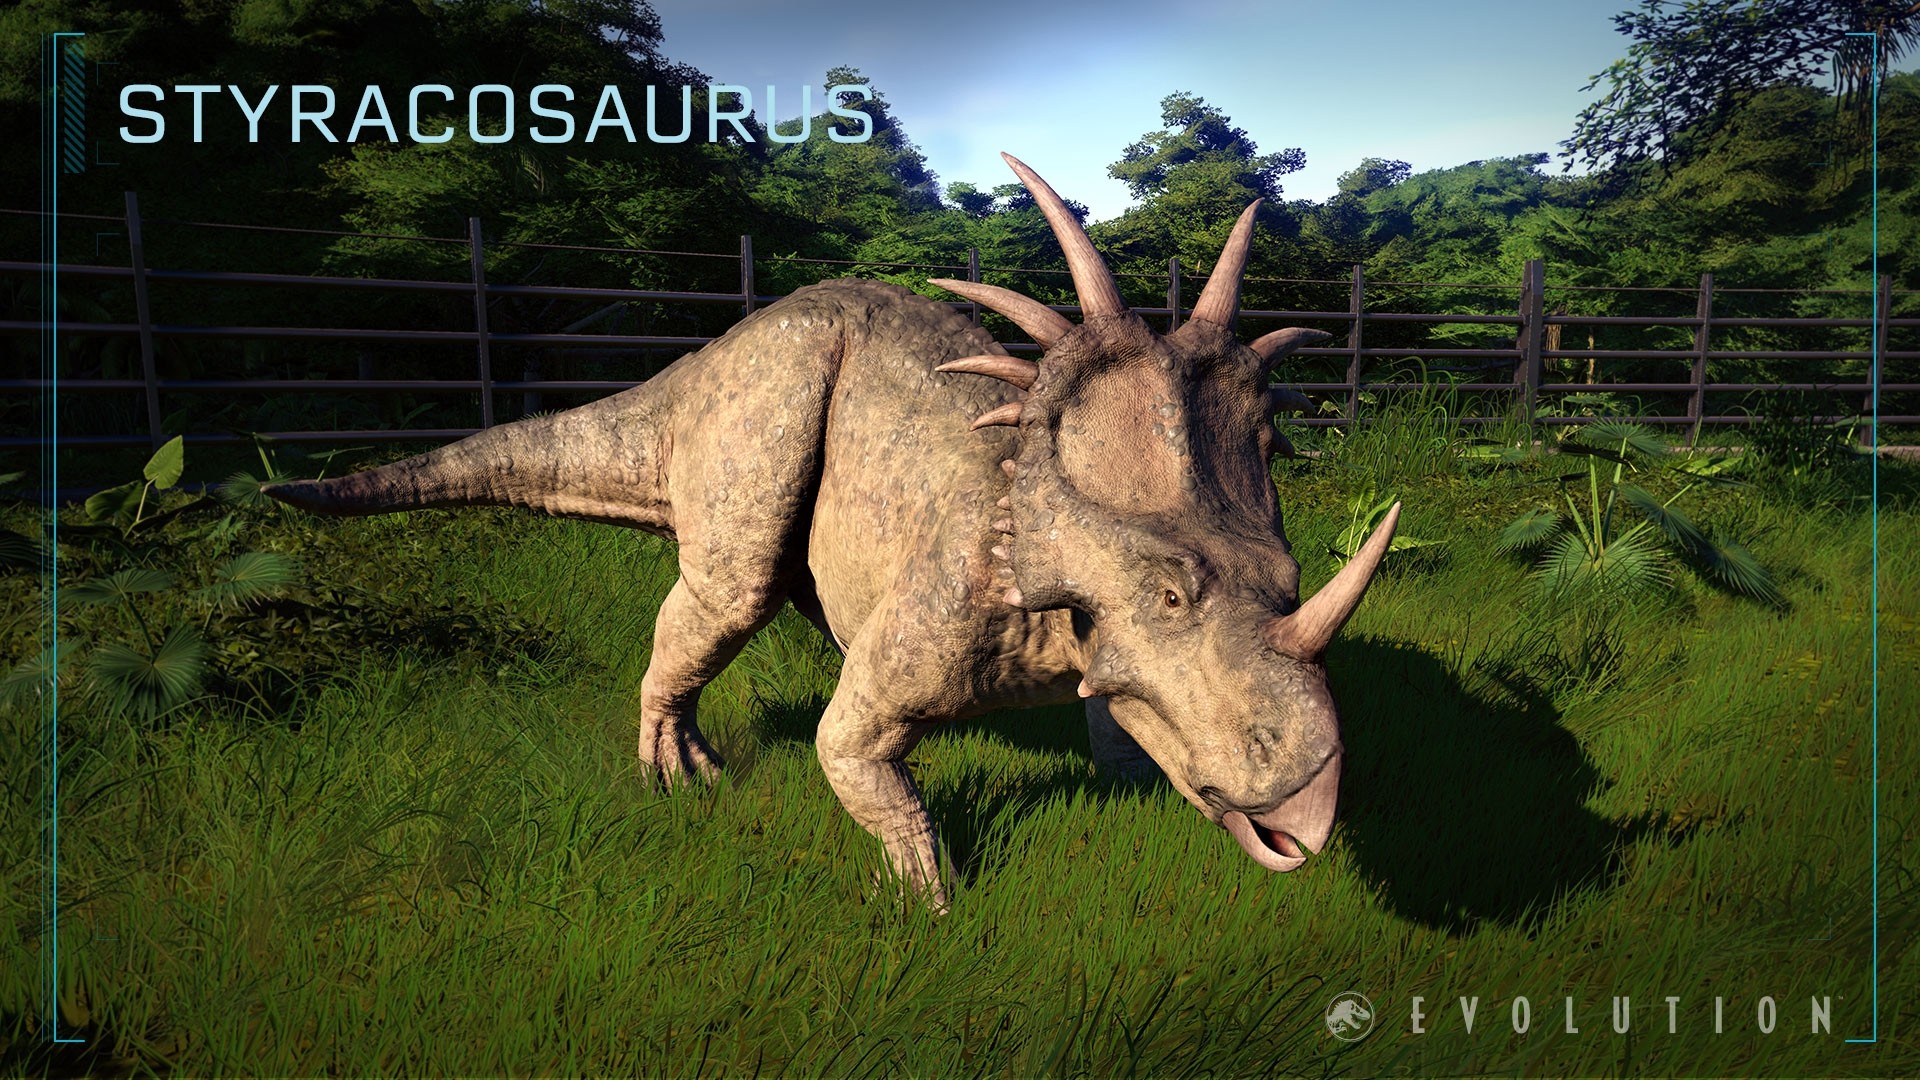 jwe_deluxe_bonus-dinosaur_styracosaurus.jpg